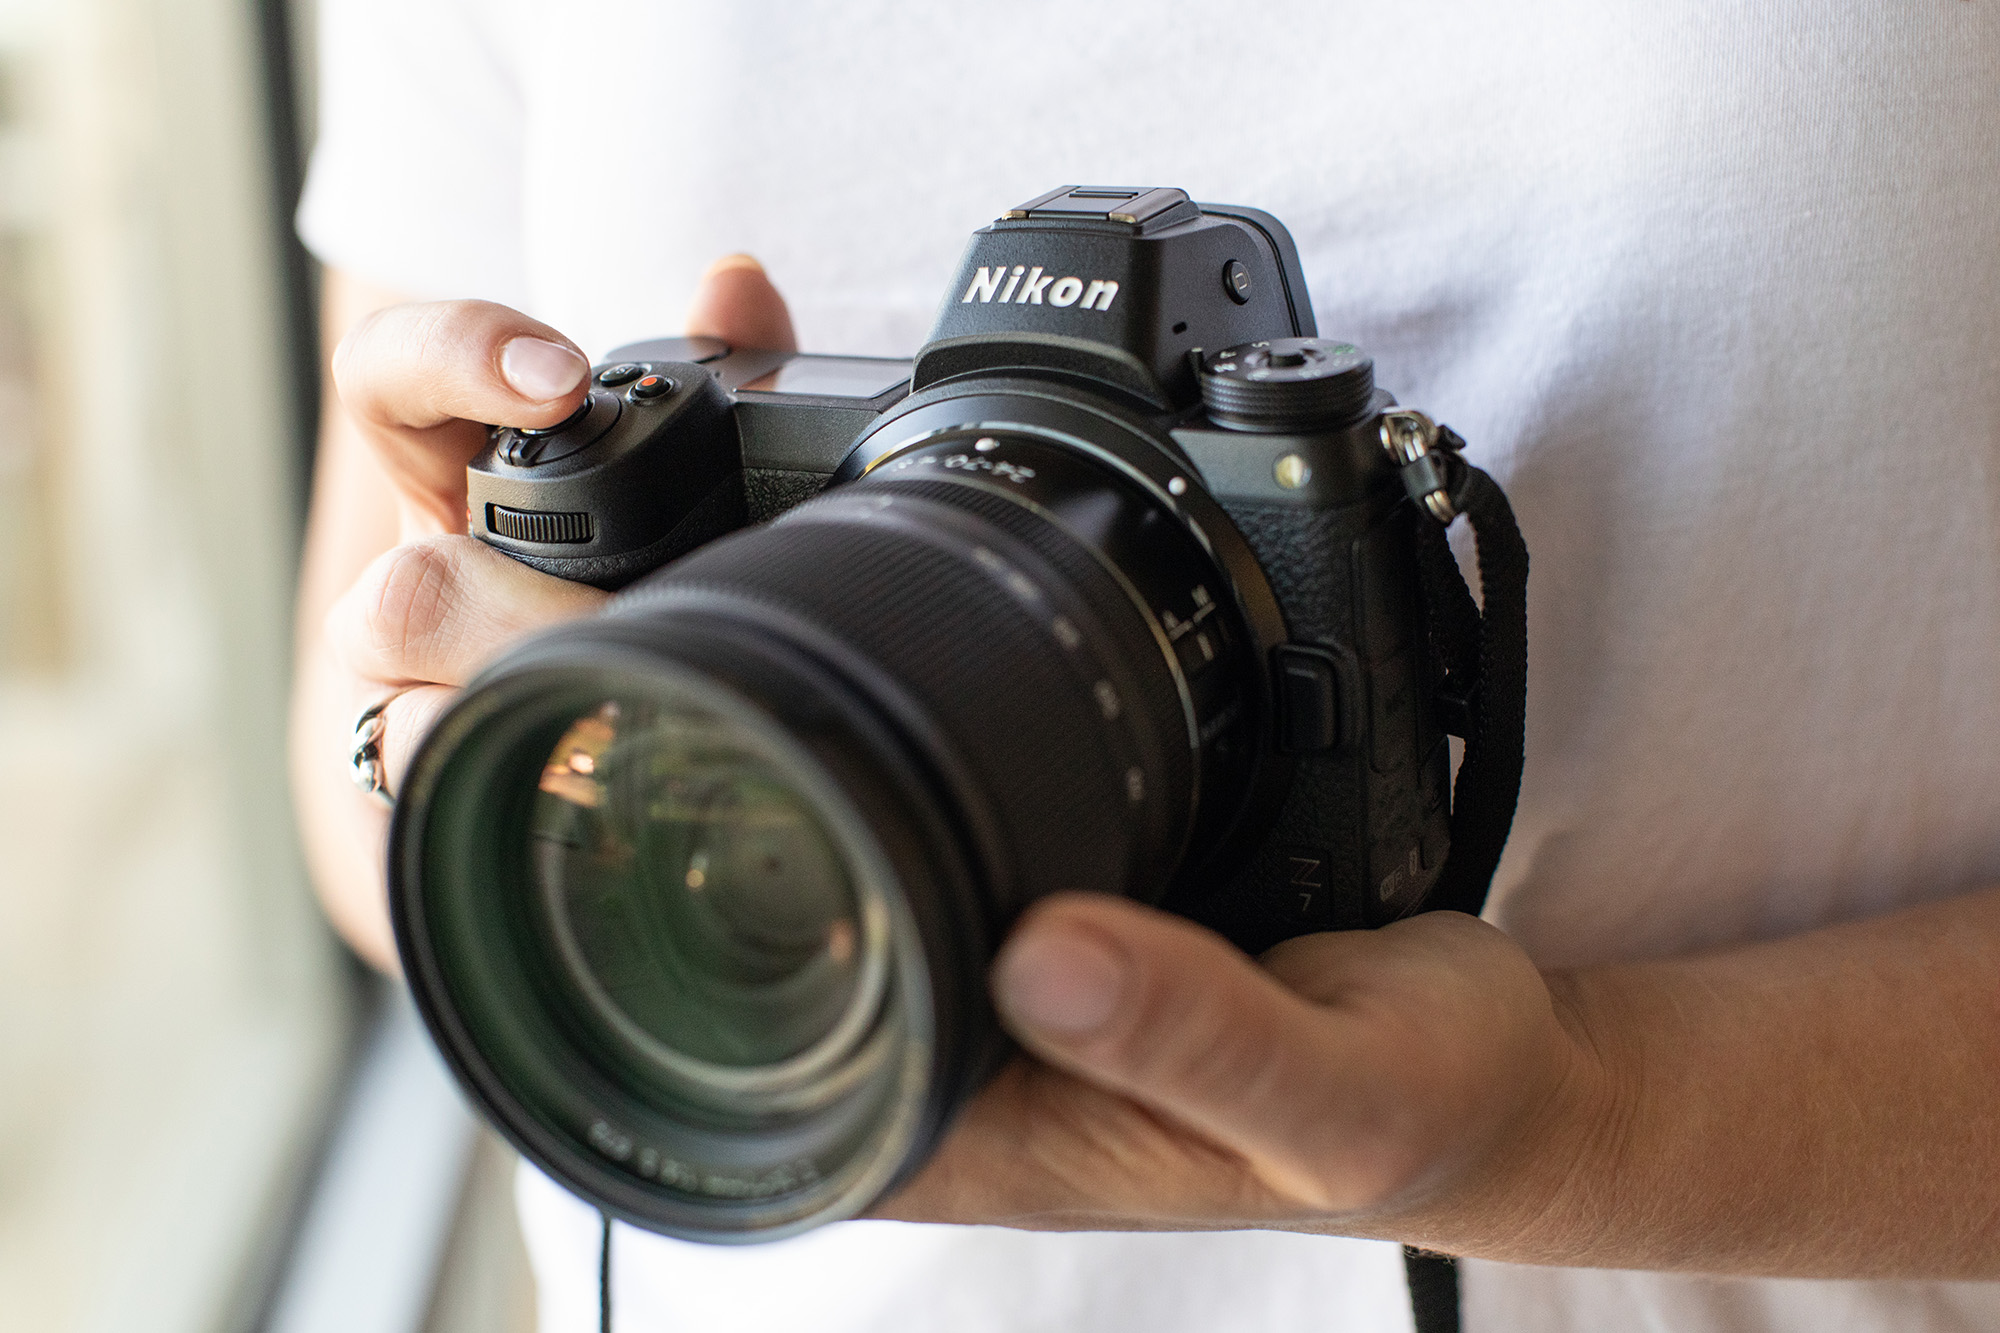 Nikon Z7 review: A giant leap towards mirrorless photography